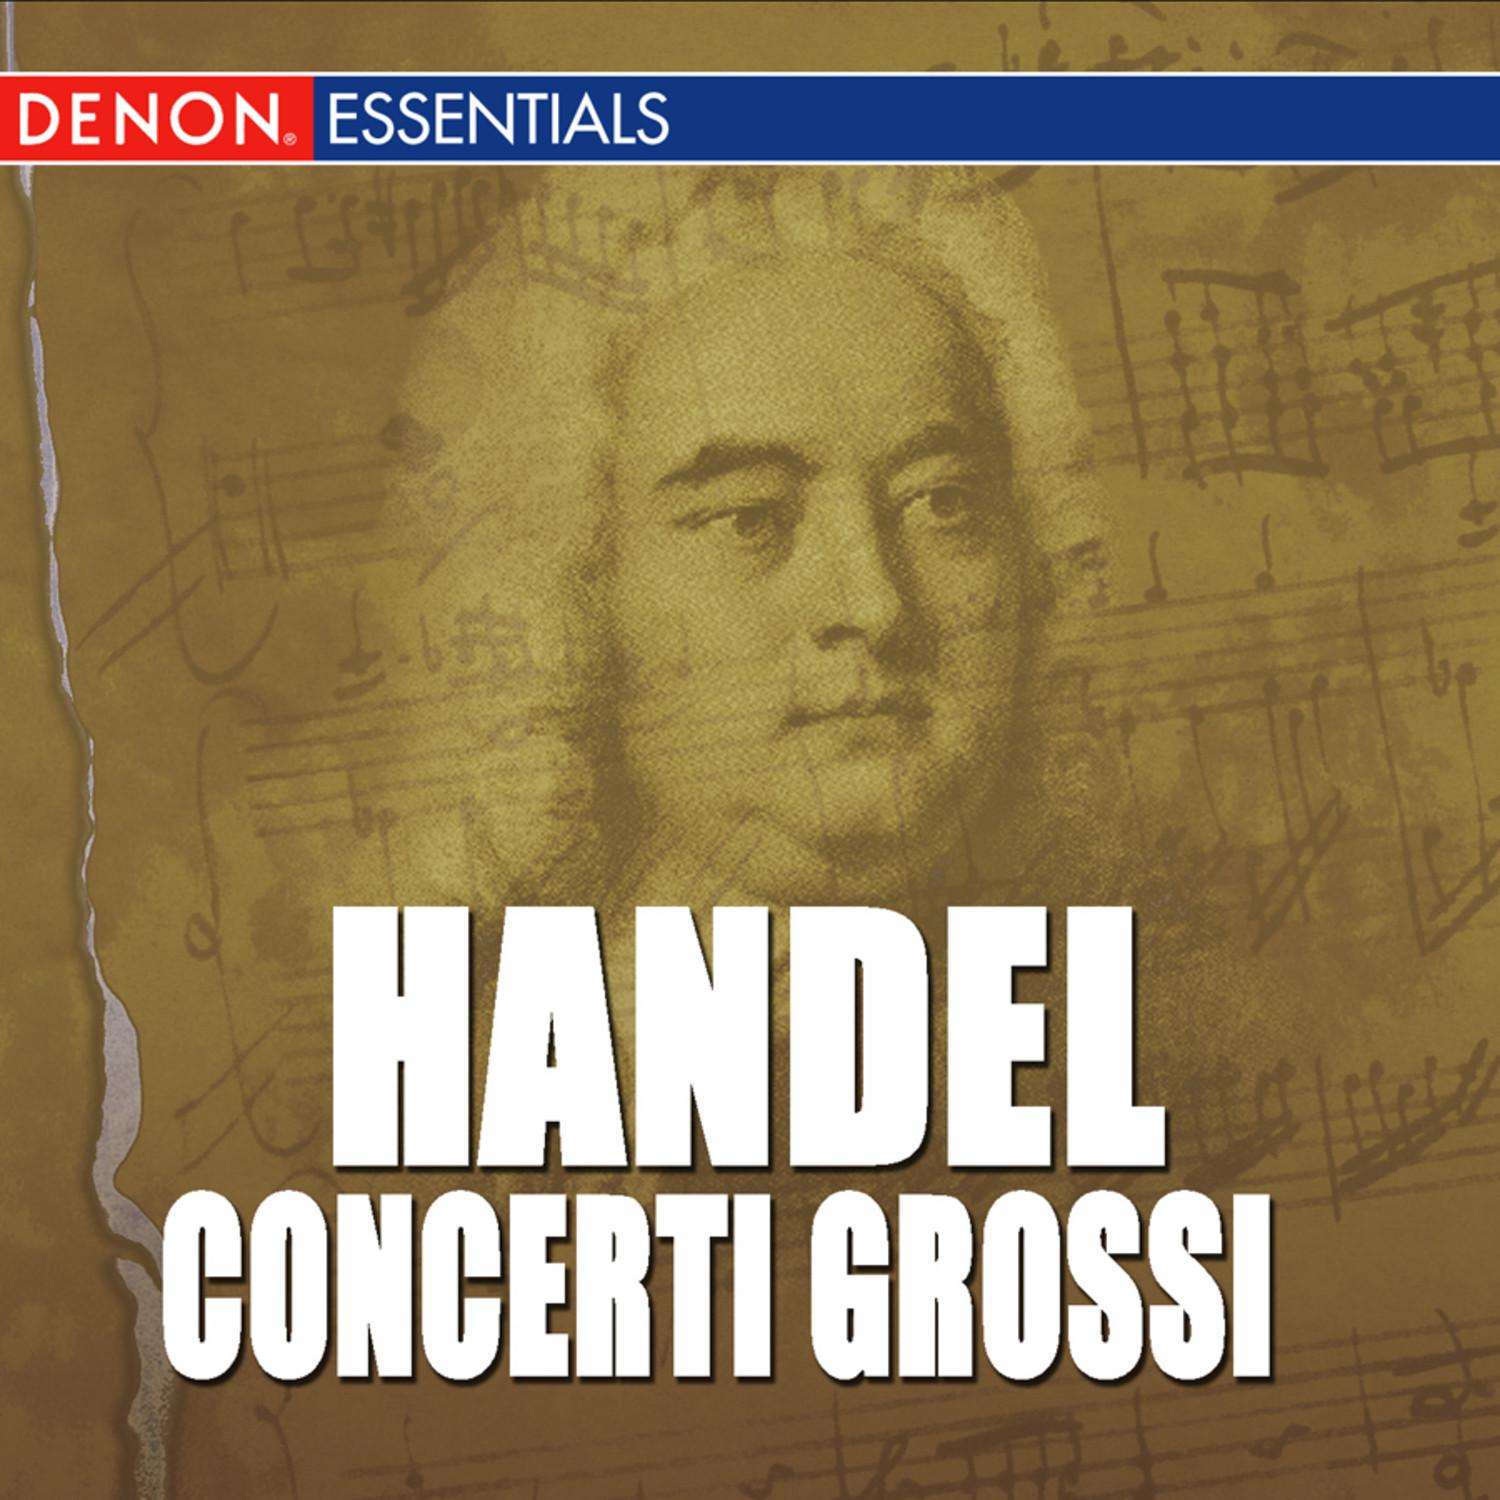 Concerto Grosso, Op. 6: No. 4 in A Minor, HWV 322: III. Largo, e piano